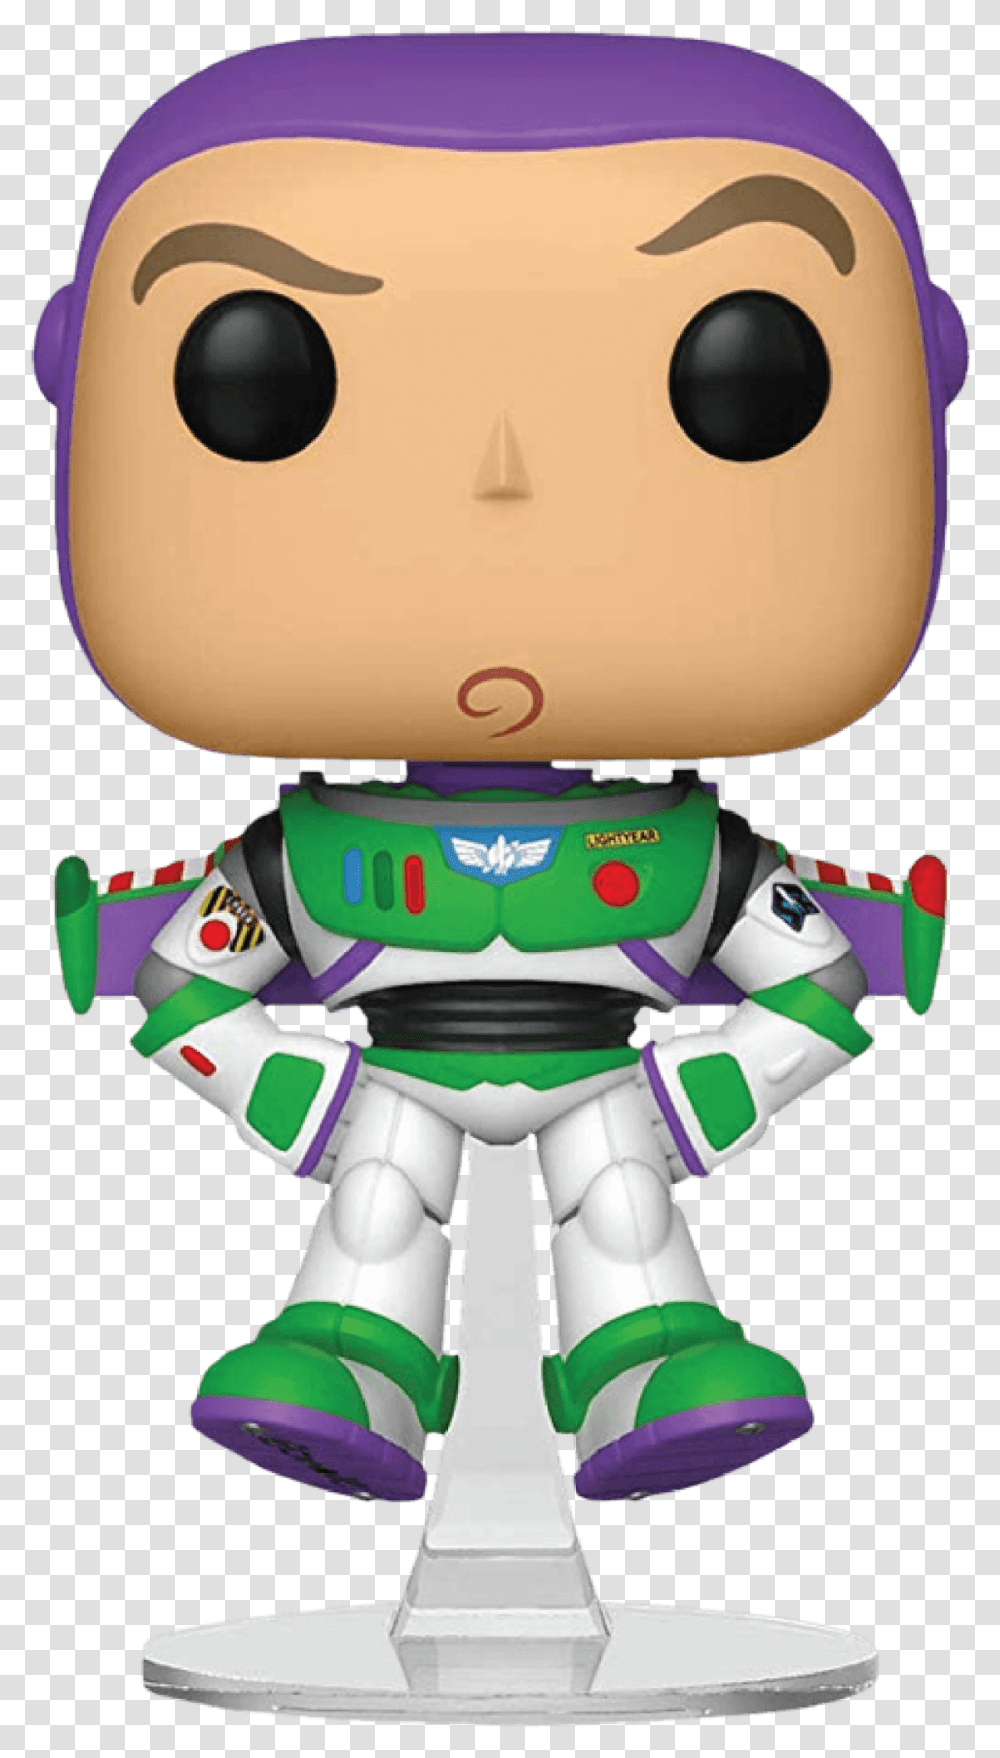 Toy Story 4 Pop, Robot Transparent Png